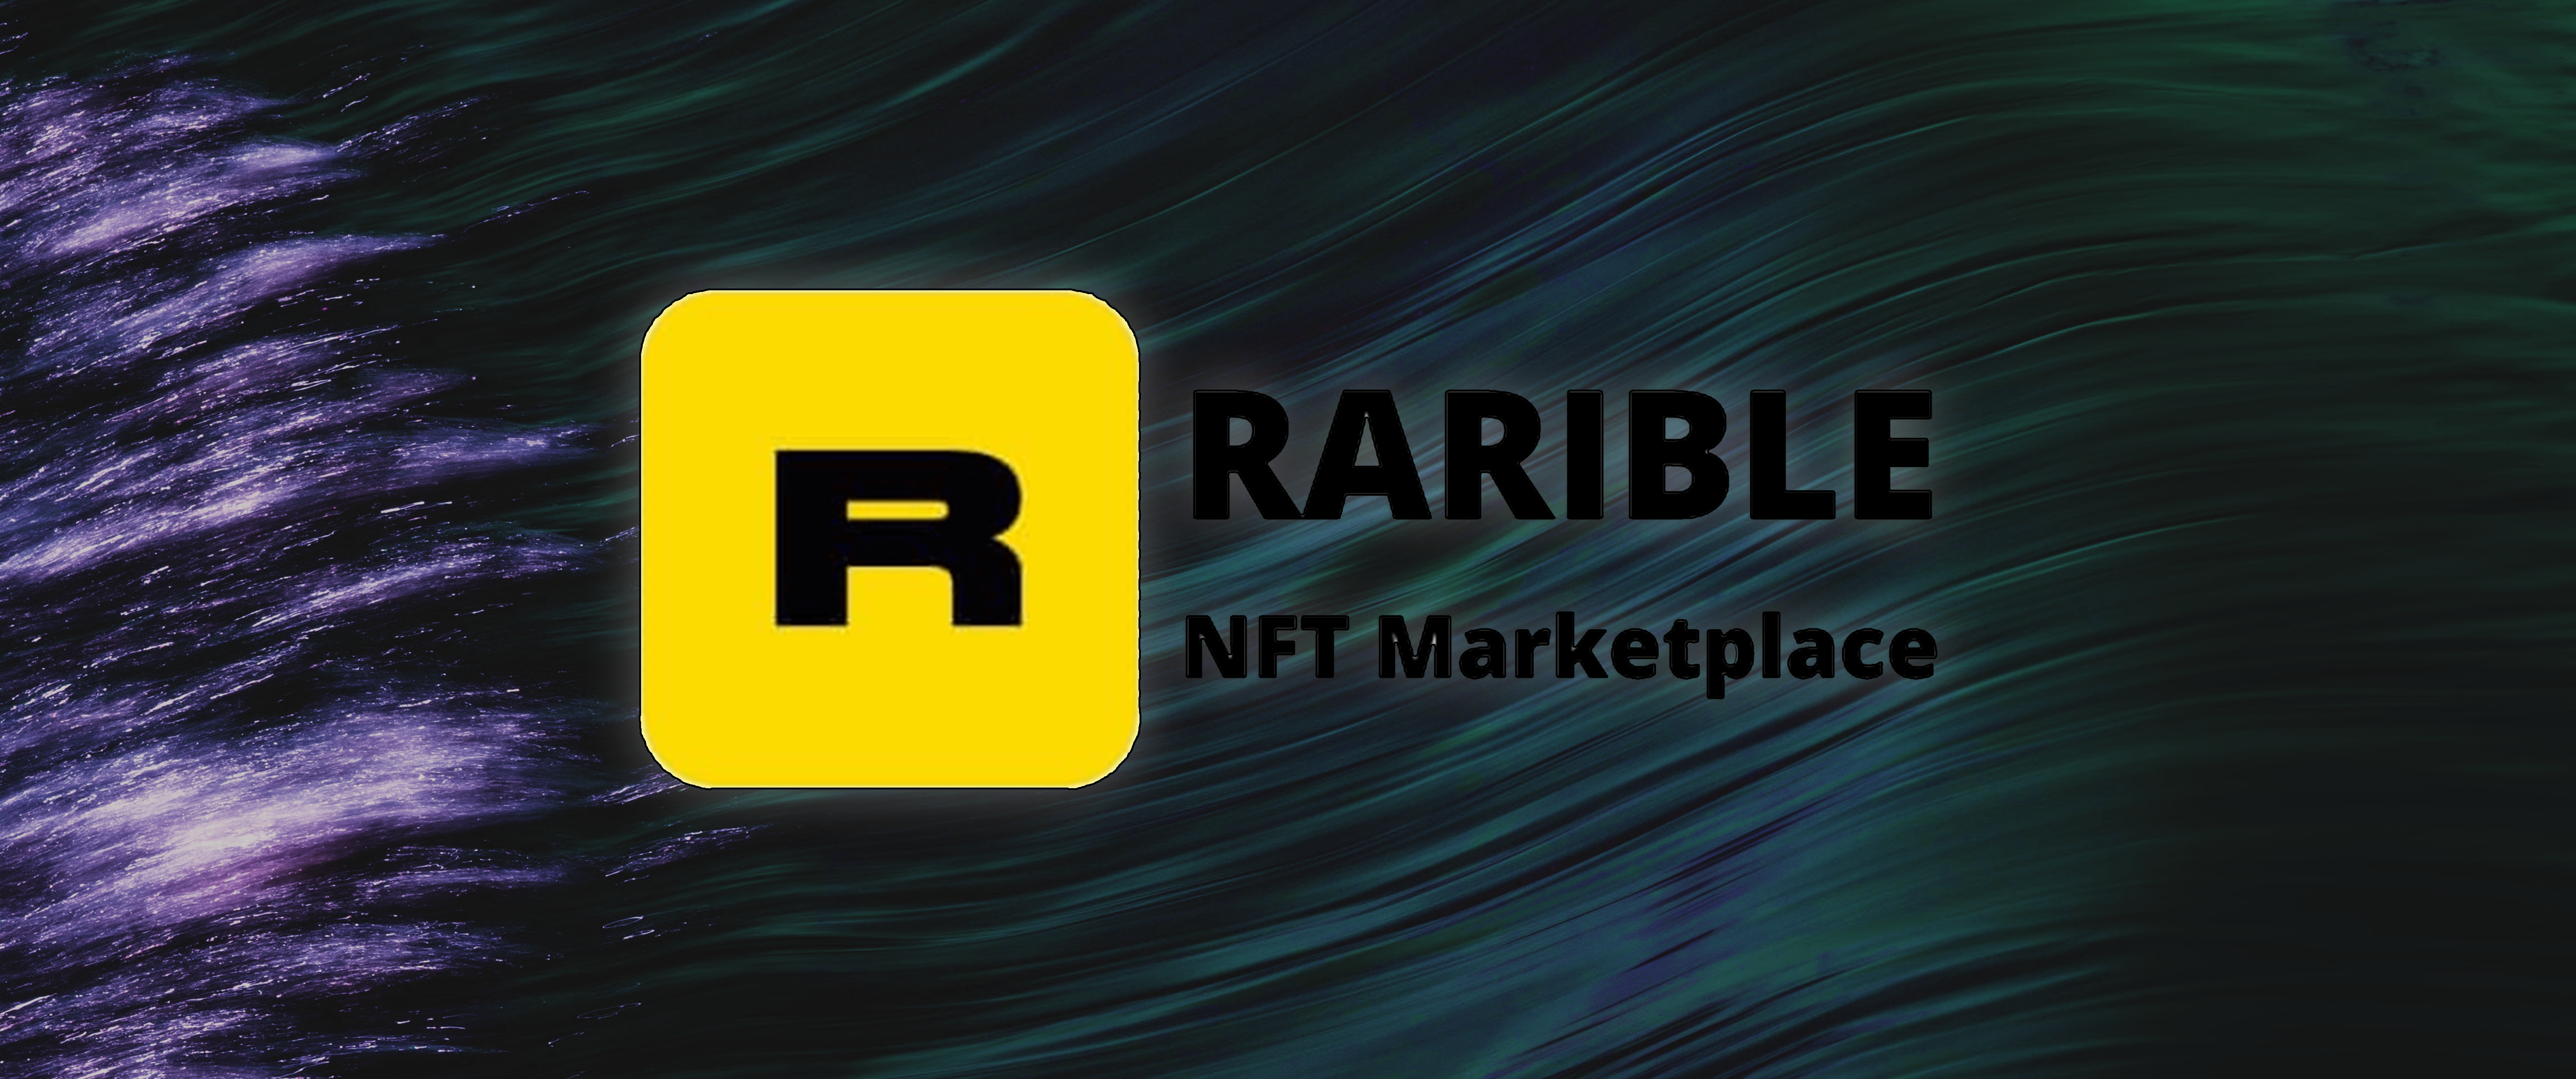 Rarible, NFT marketplace, NFT, NFTs, marketplace, Ethereum, ETH